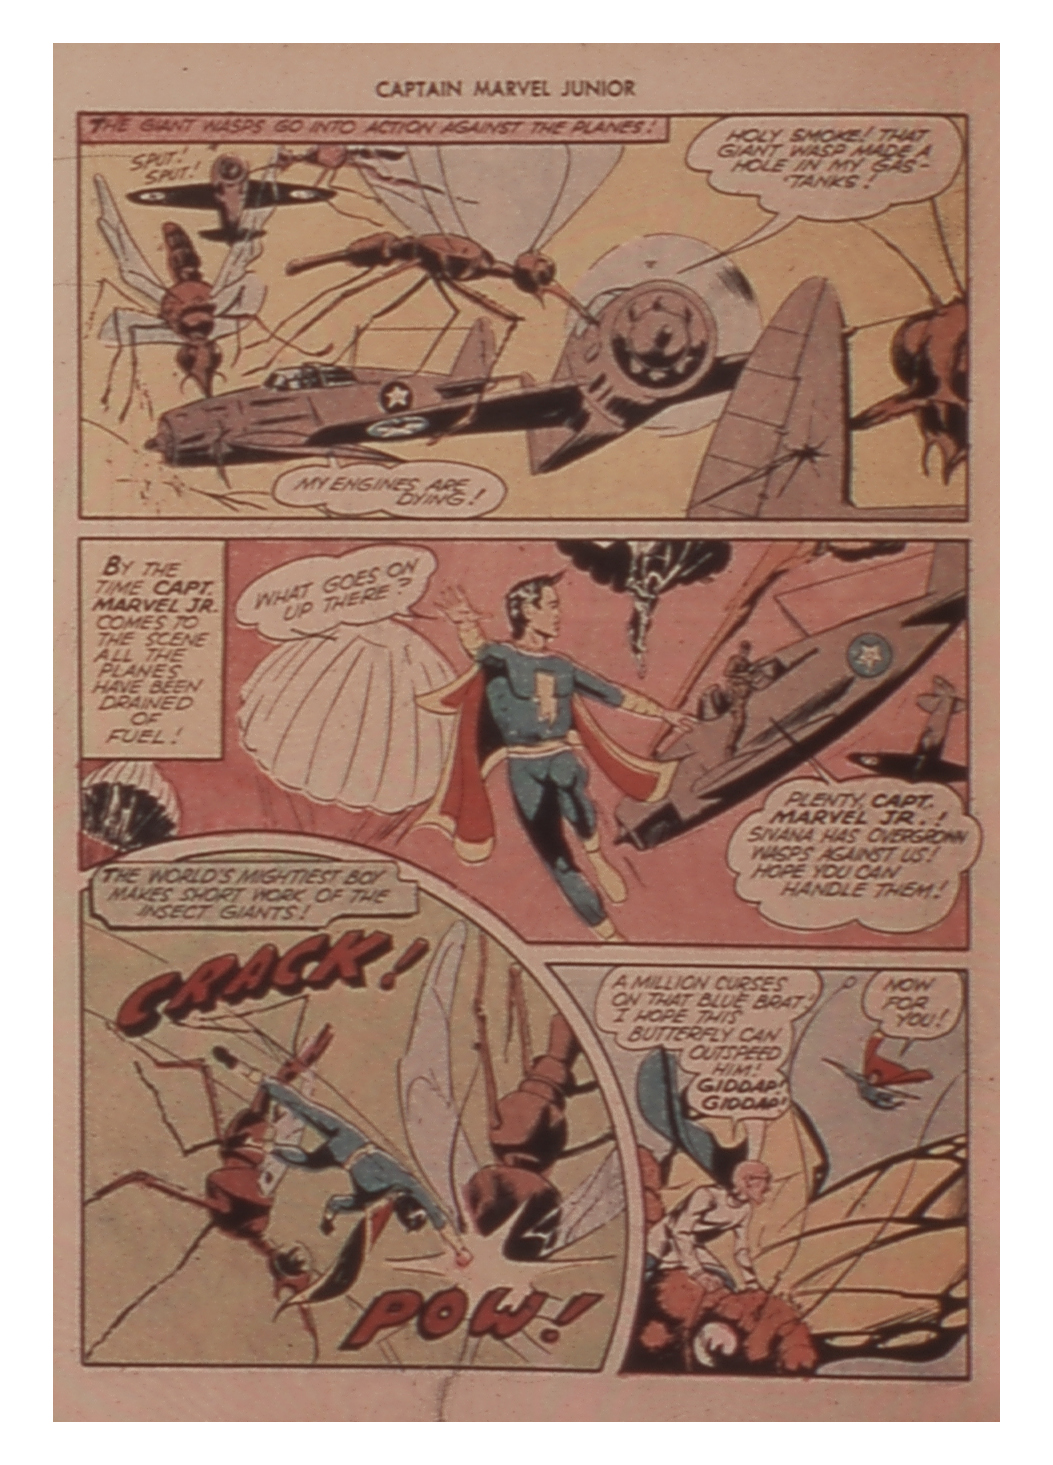 Read online Captain Marvel, Jr. comic -  Issue #12 - 40